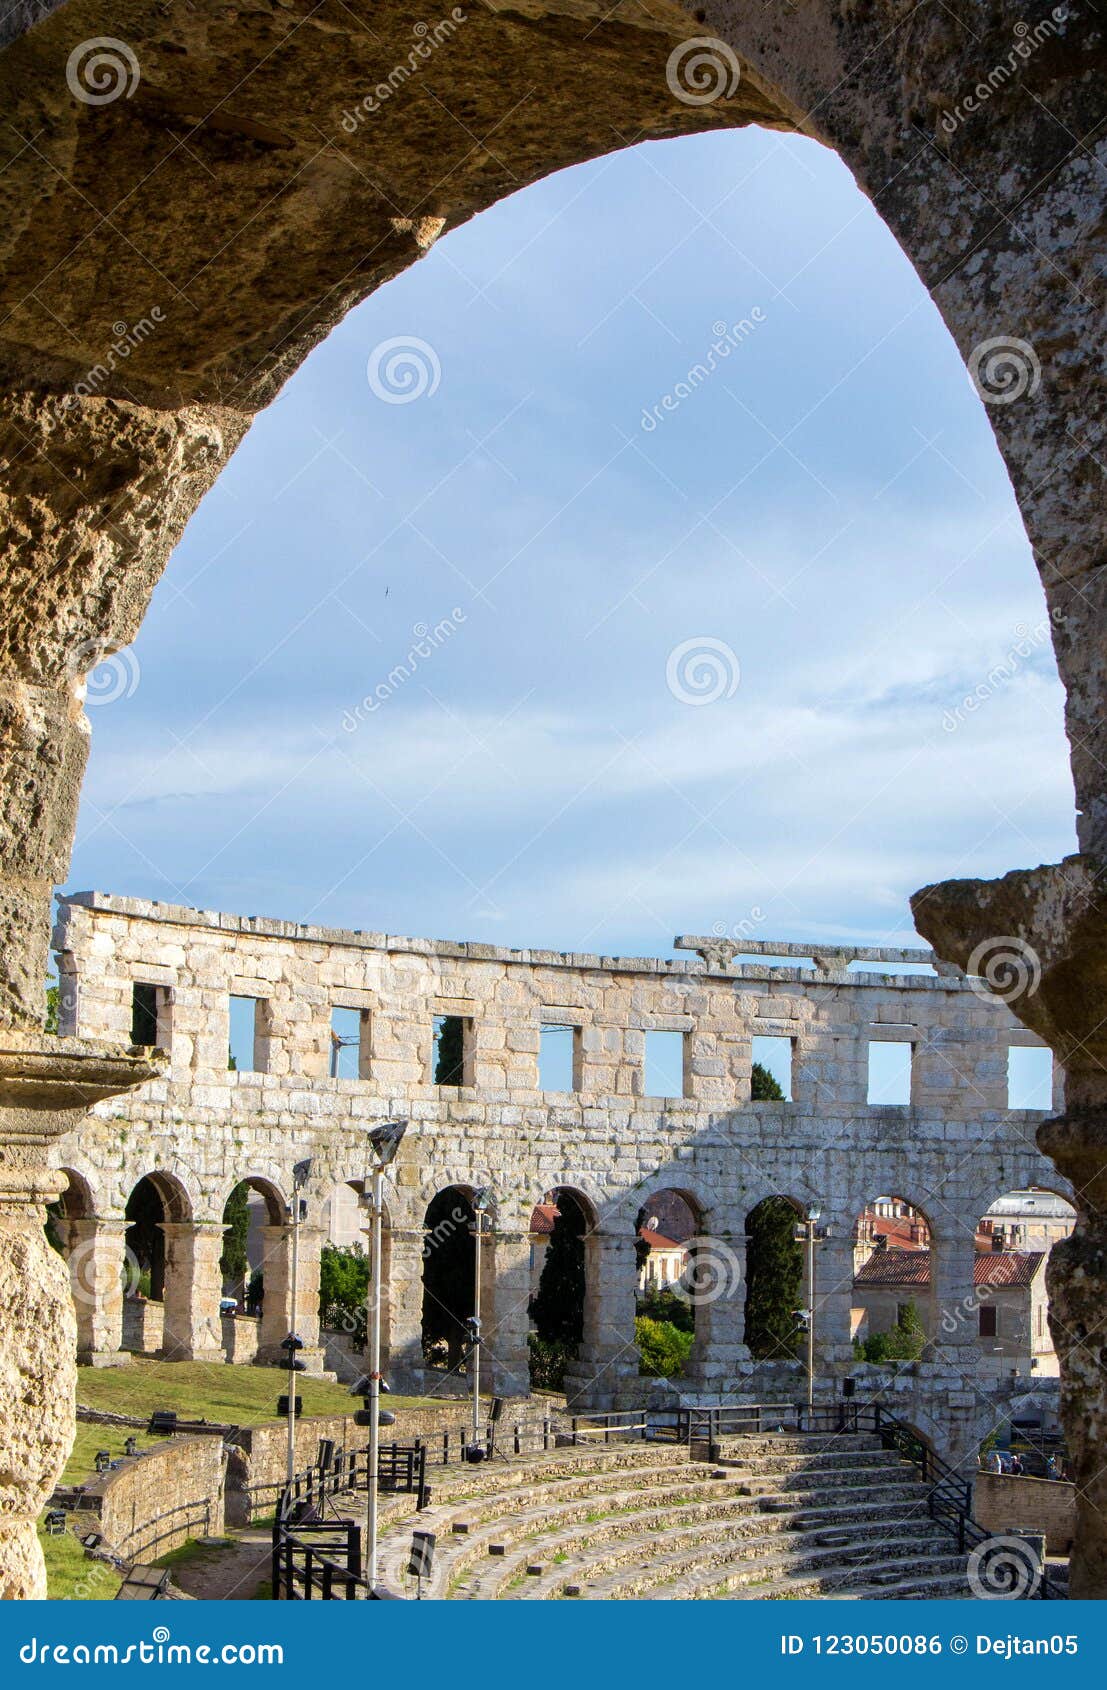 the pula arena, ancient roman architecture